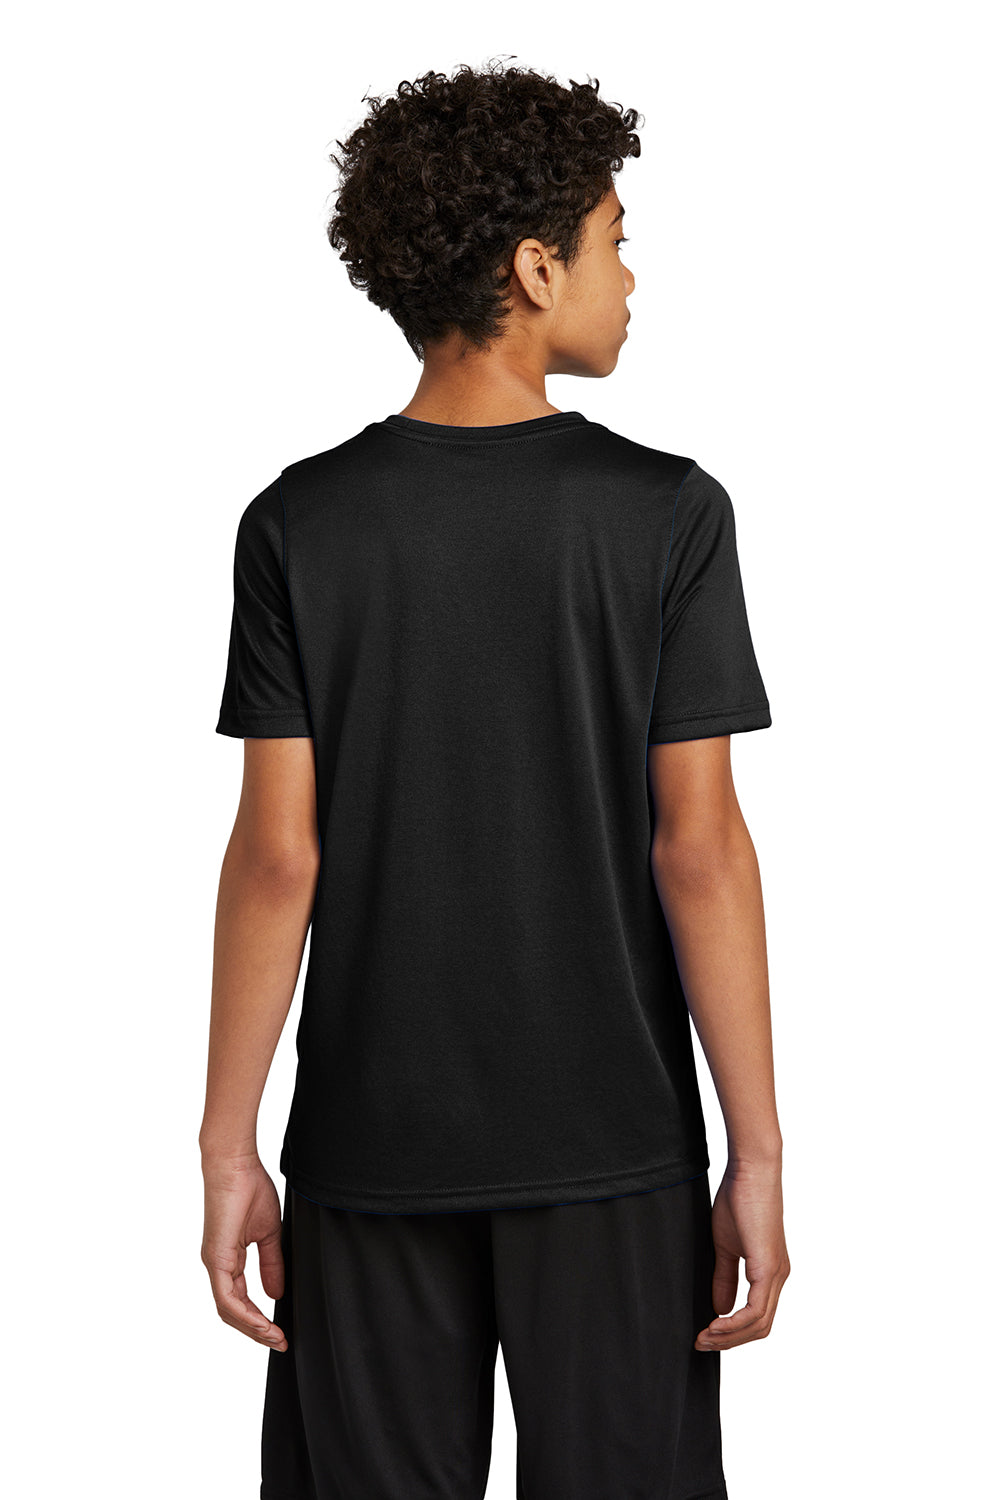 Nike NKDX8787 Youth rLegend Dri-Fit Moisture Wicking Short Sleeve Crewneck T-Shirt Black Model Back